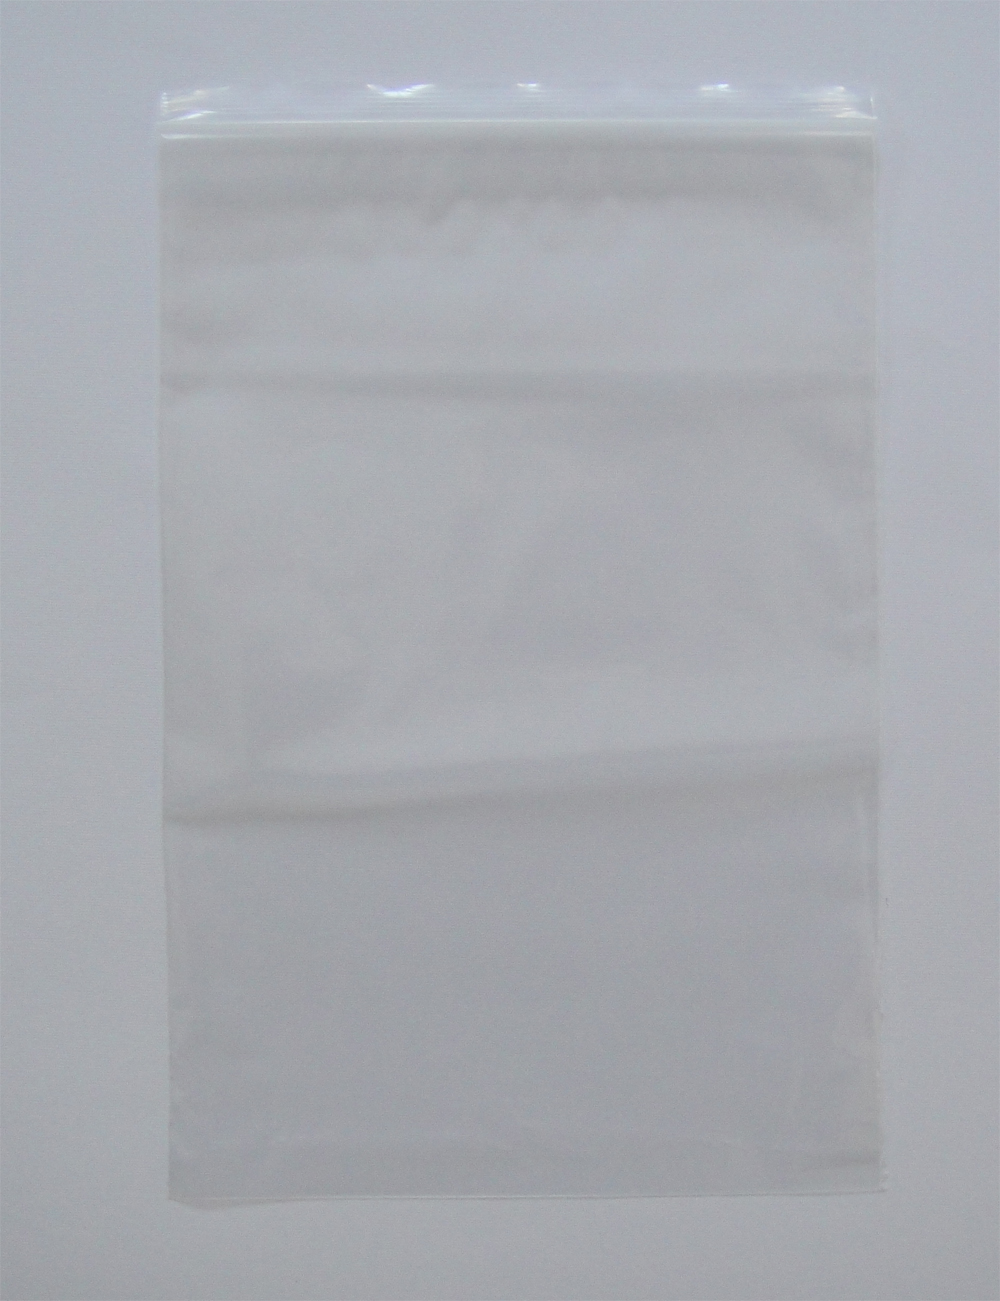 300 x Grip Seal Resealable Poly Bags 2.25" x 2.25" GL1 